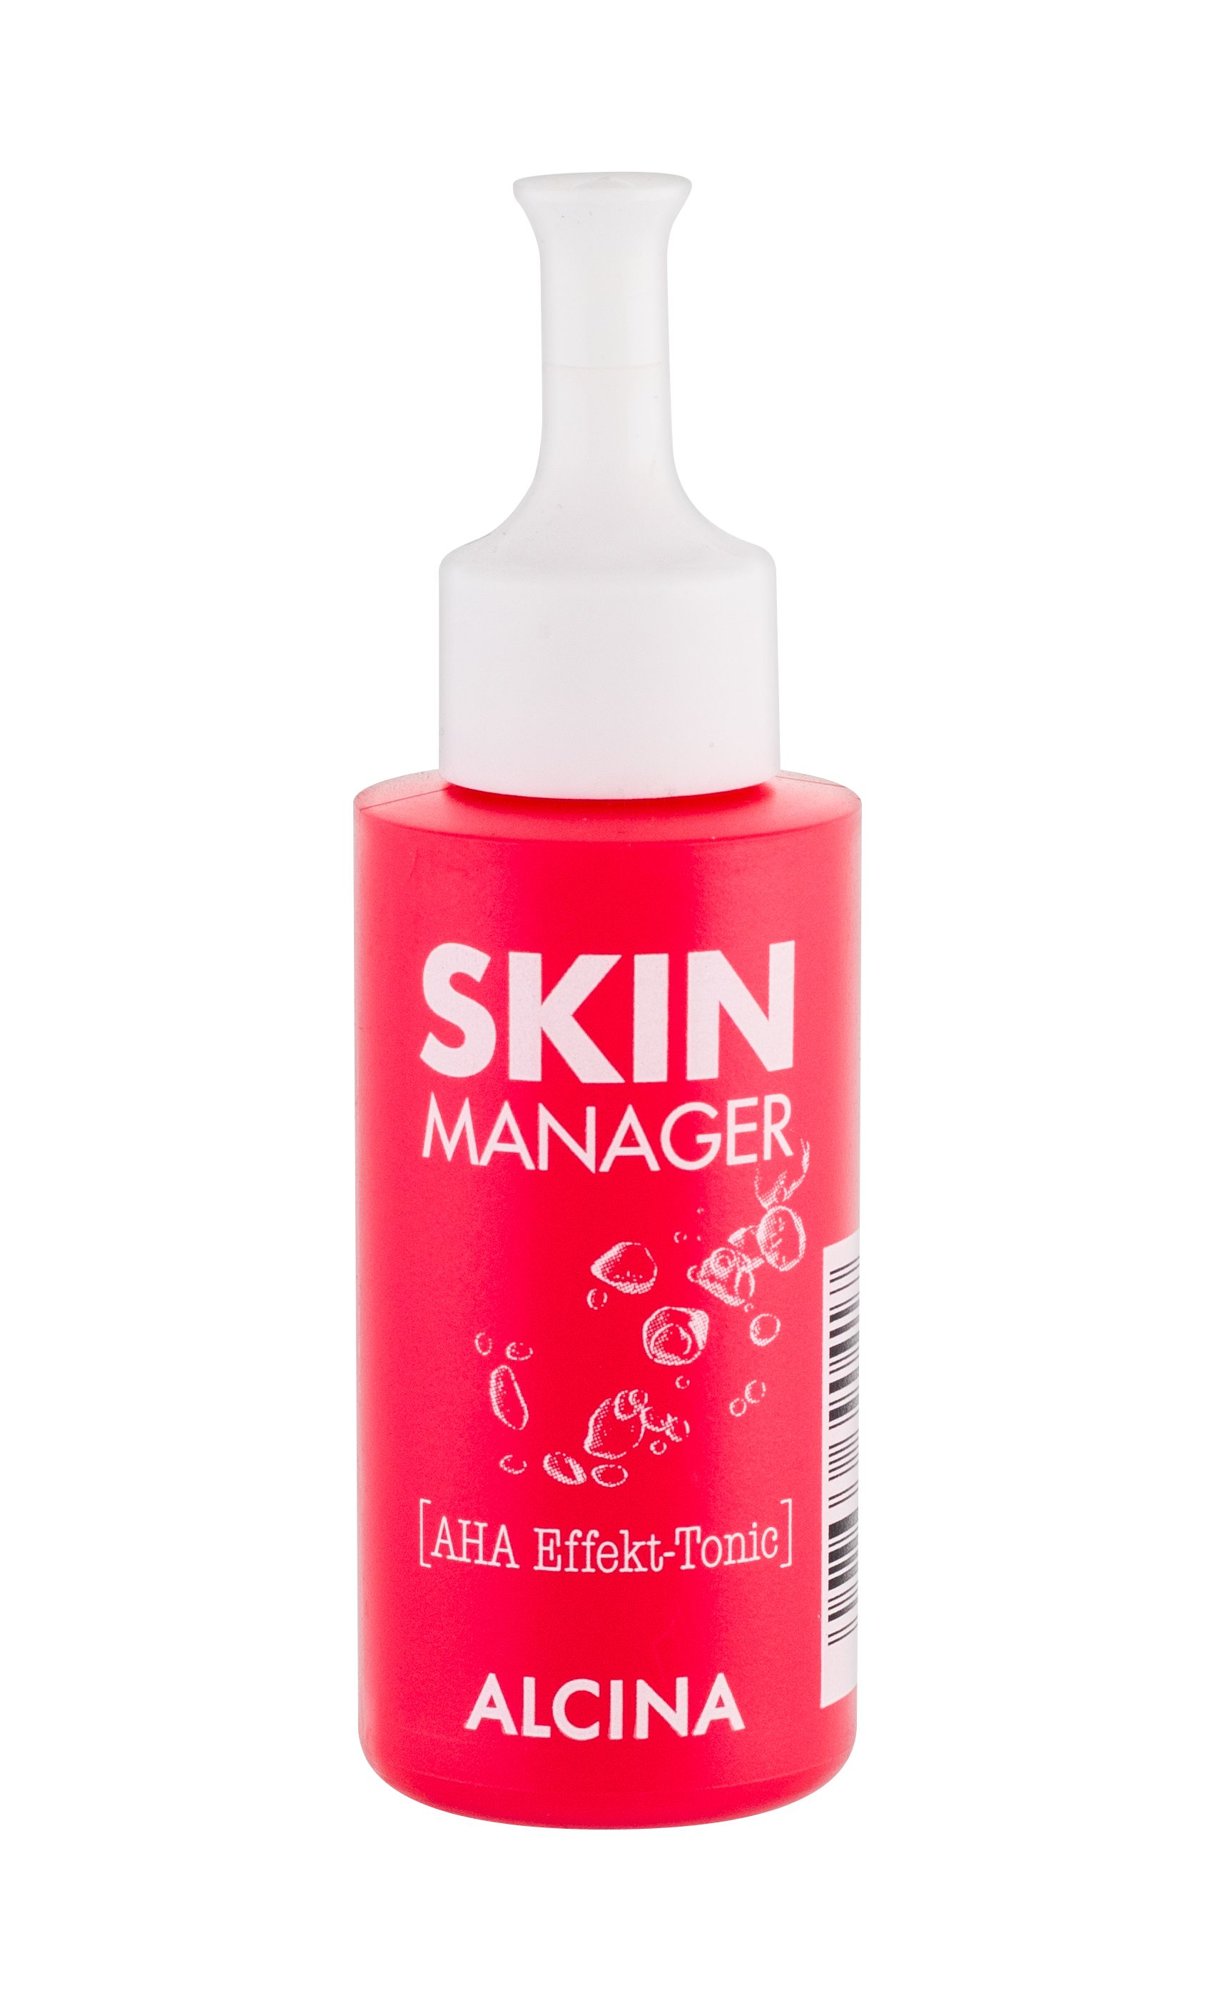 ALCINA Skin Manager AHA Effekt Tonic 50ml valomasis vanduo veidui